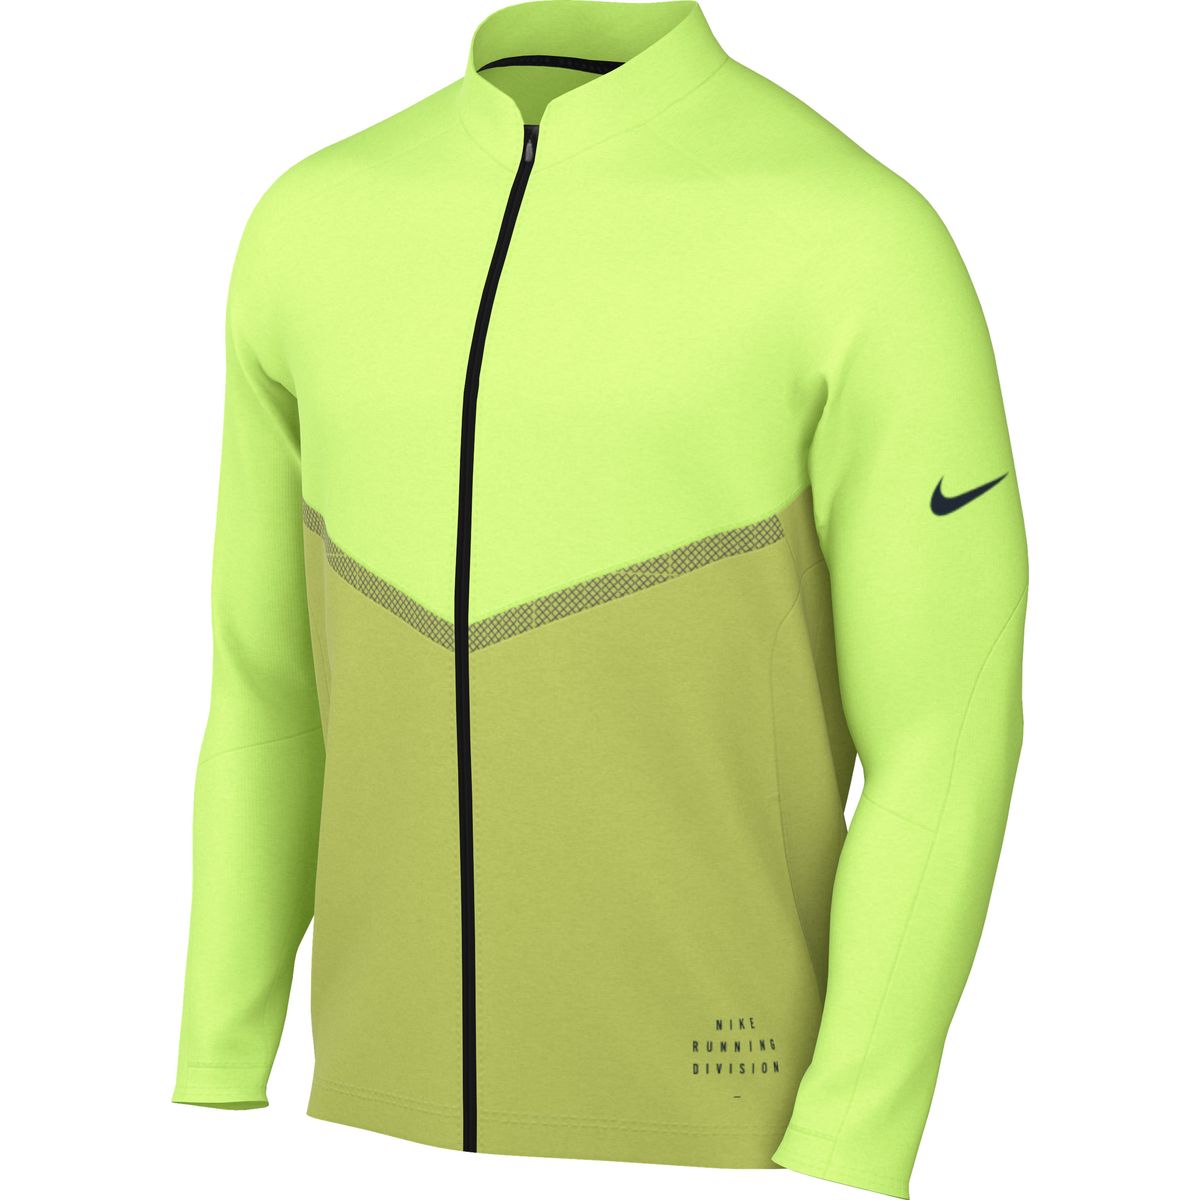 Nike Dri-FIT Run Division Element Full-Zip Top Herren Sweatshirt